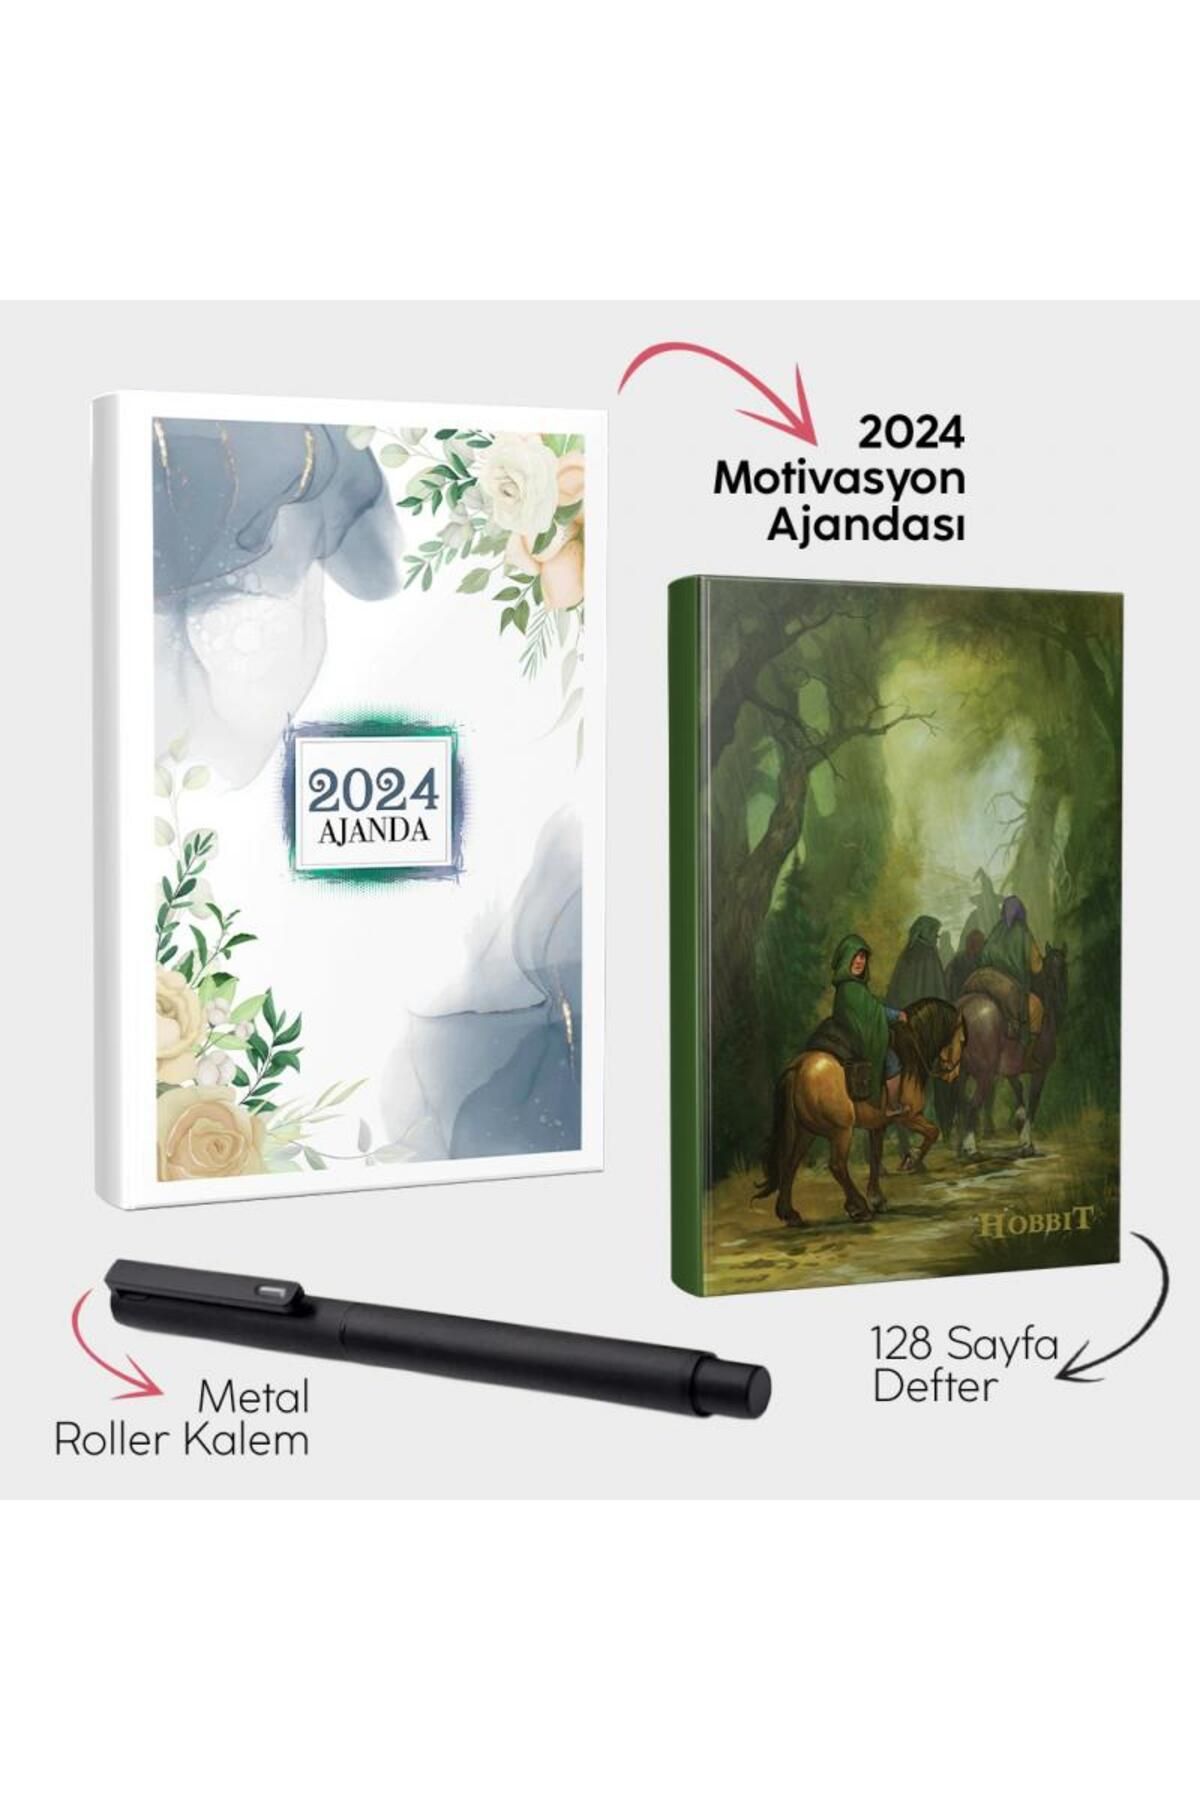 Halk Kitabevi Cennet 2024 Motivasyon Ajandası - Hobbit Defter ve Metal Roller Kalem